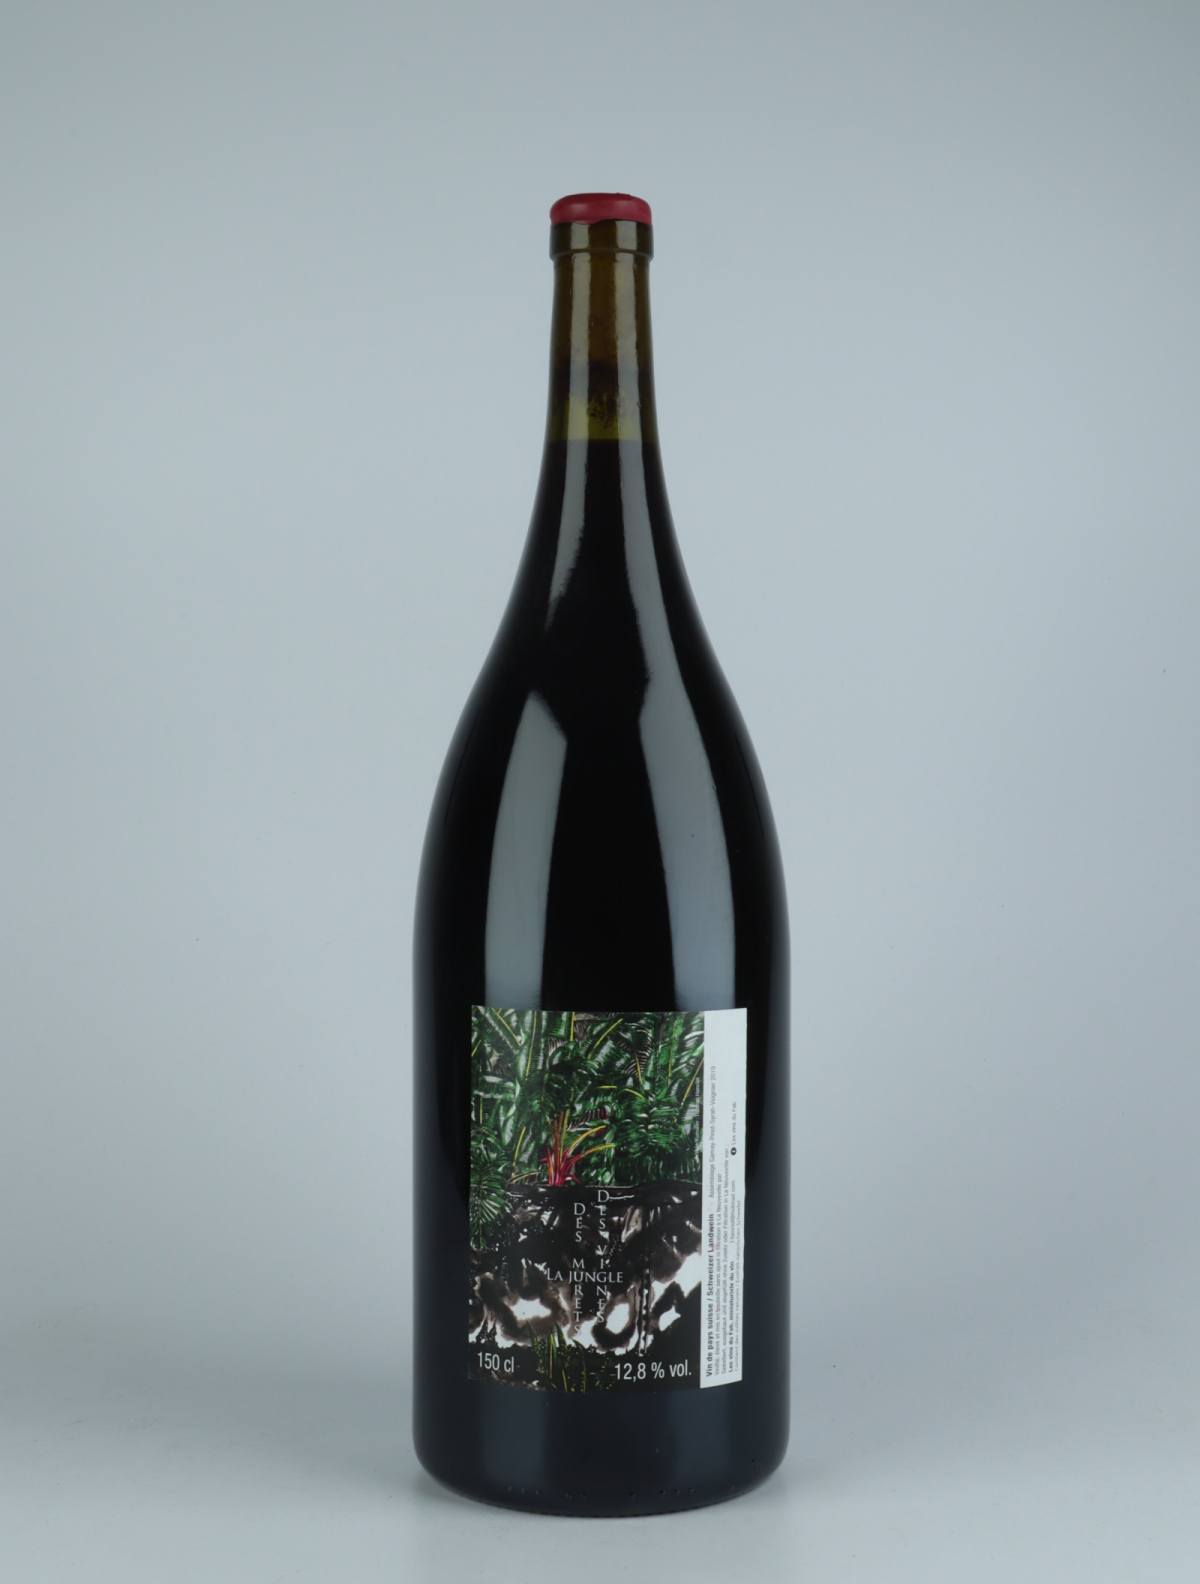 A bottle 2019 Des Murets, des Vignes, la Jungle Red wine from , Neuchâtel in Switzerland